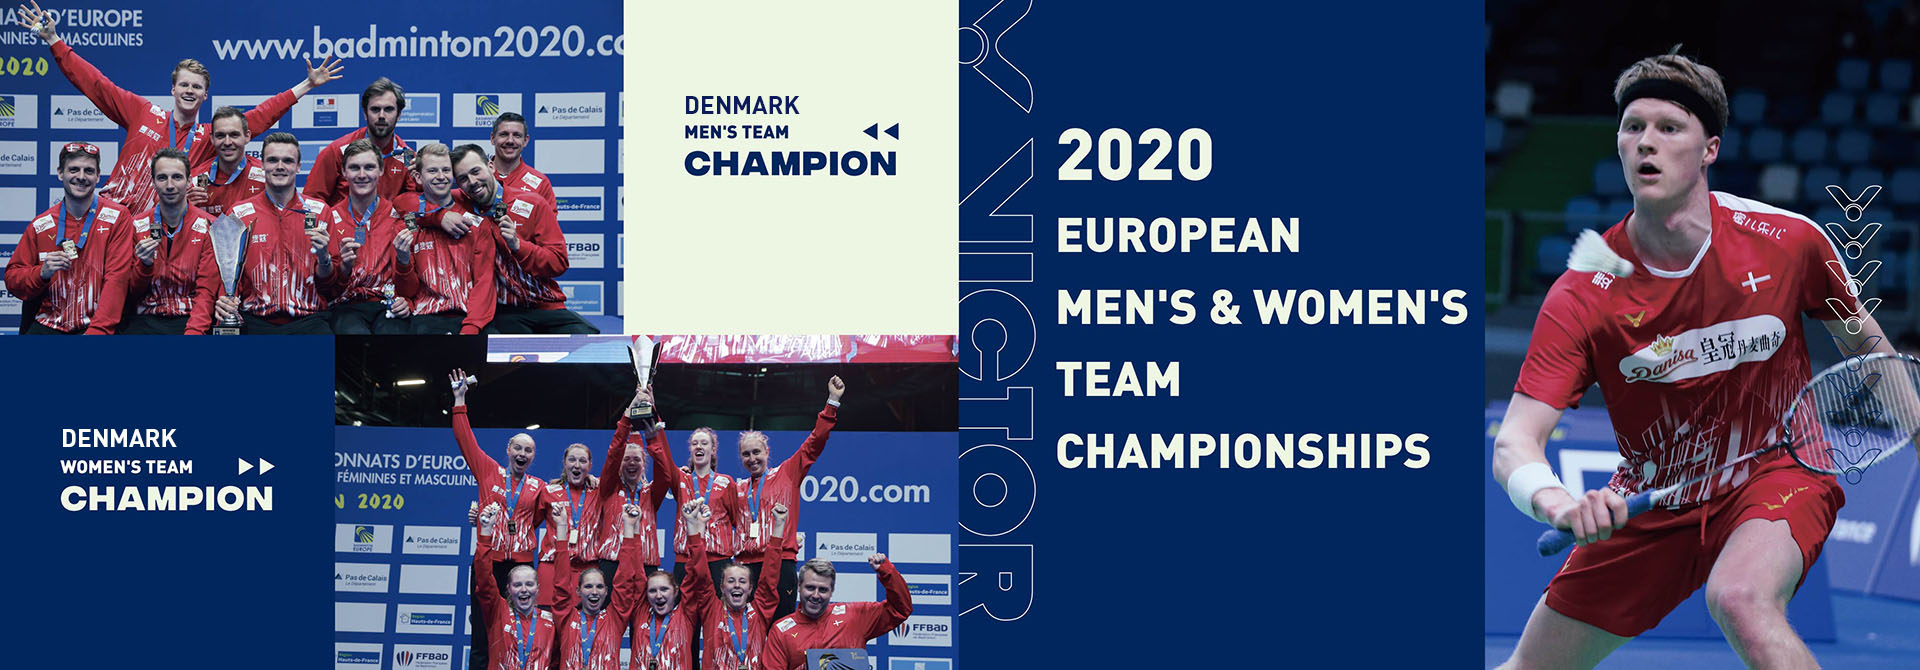 2020 EUROPEAN MEN'S & WOMEN'S TEAM CHAMPIONSHIPS_EN